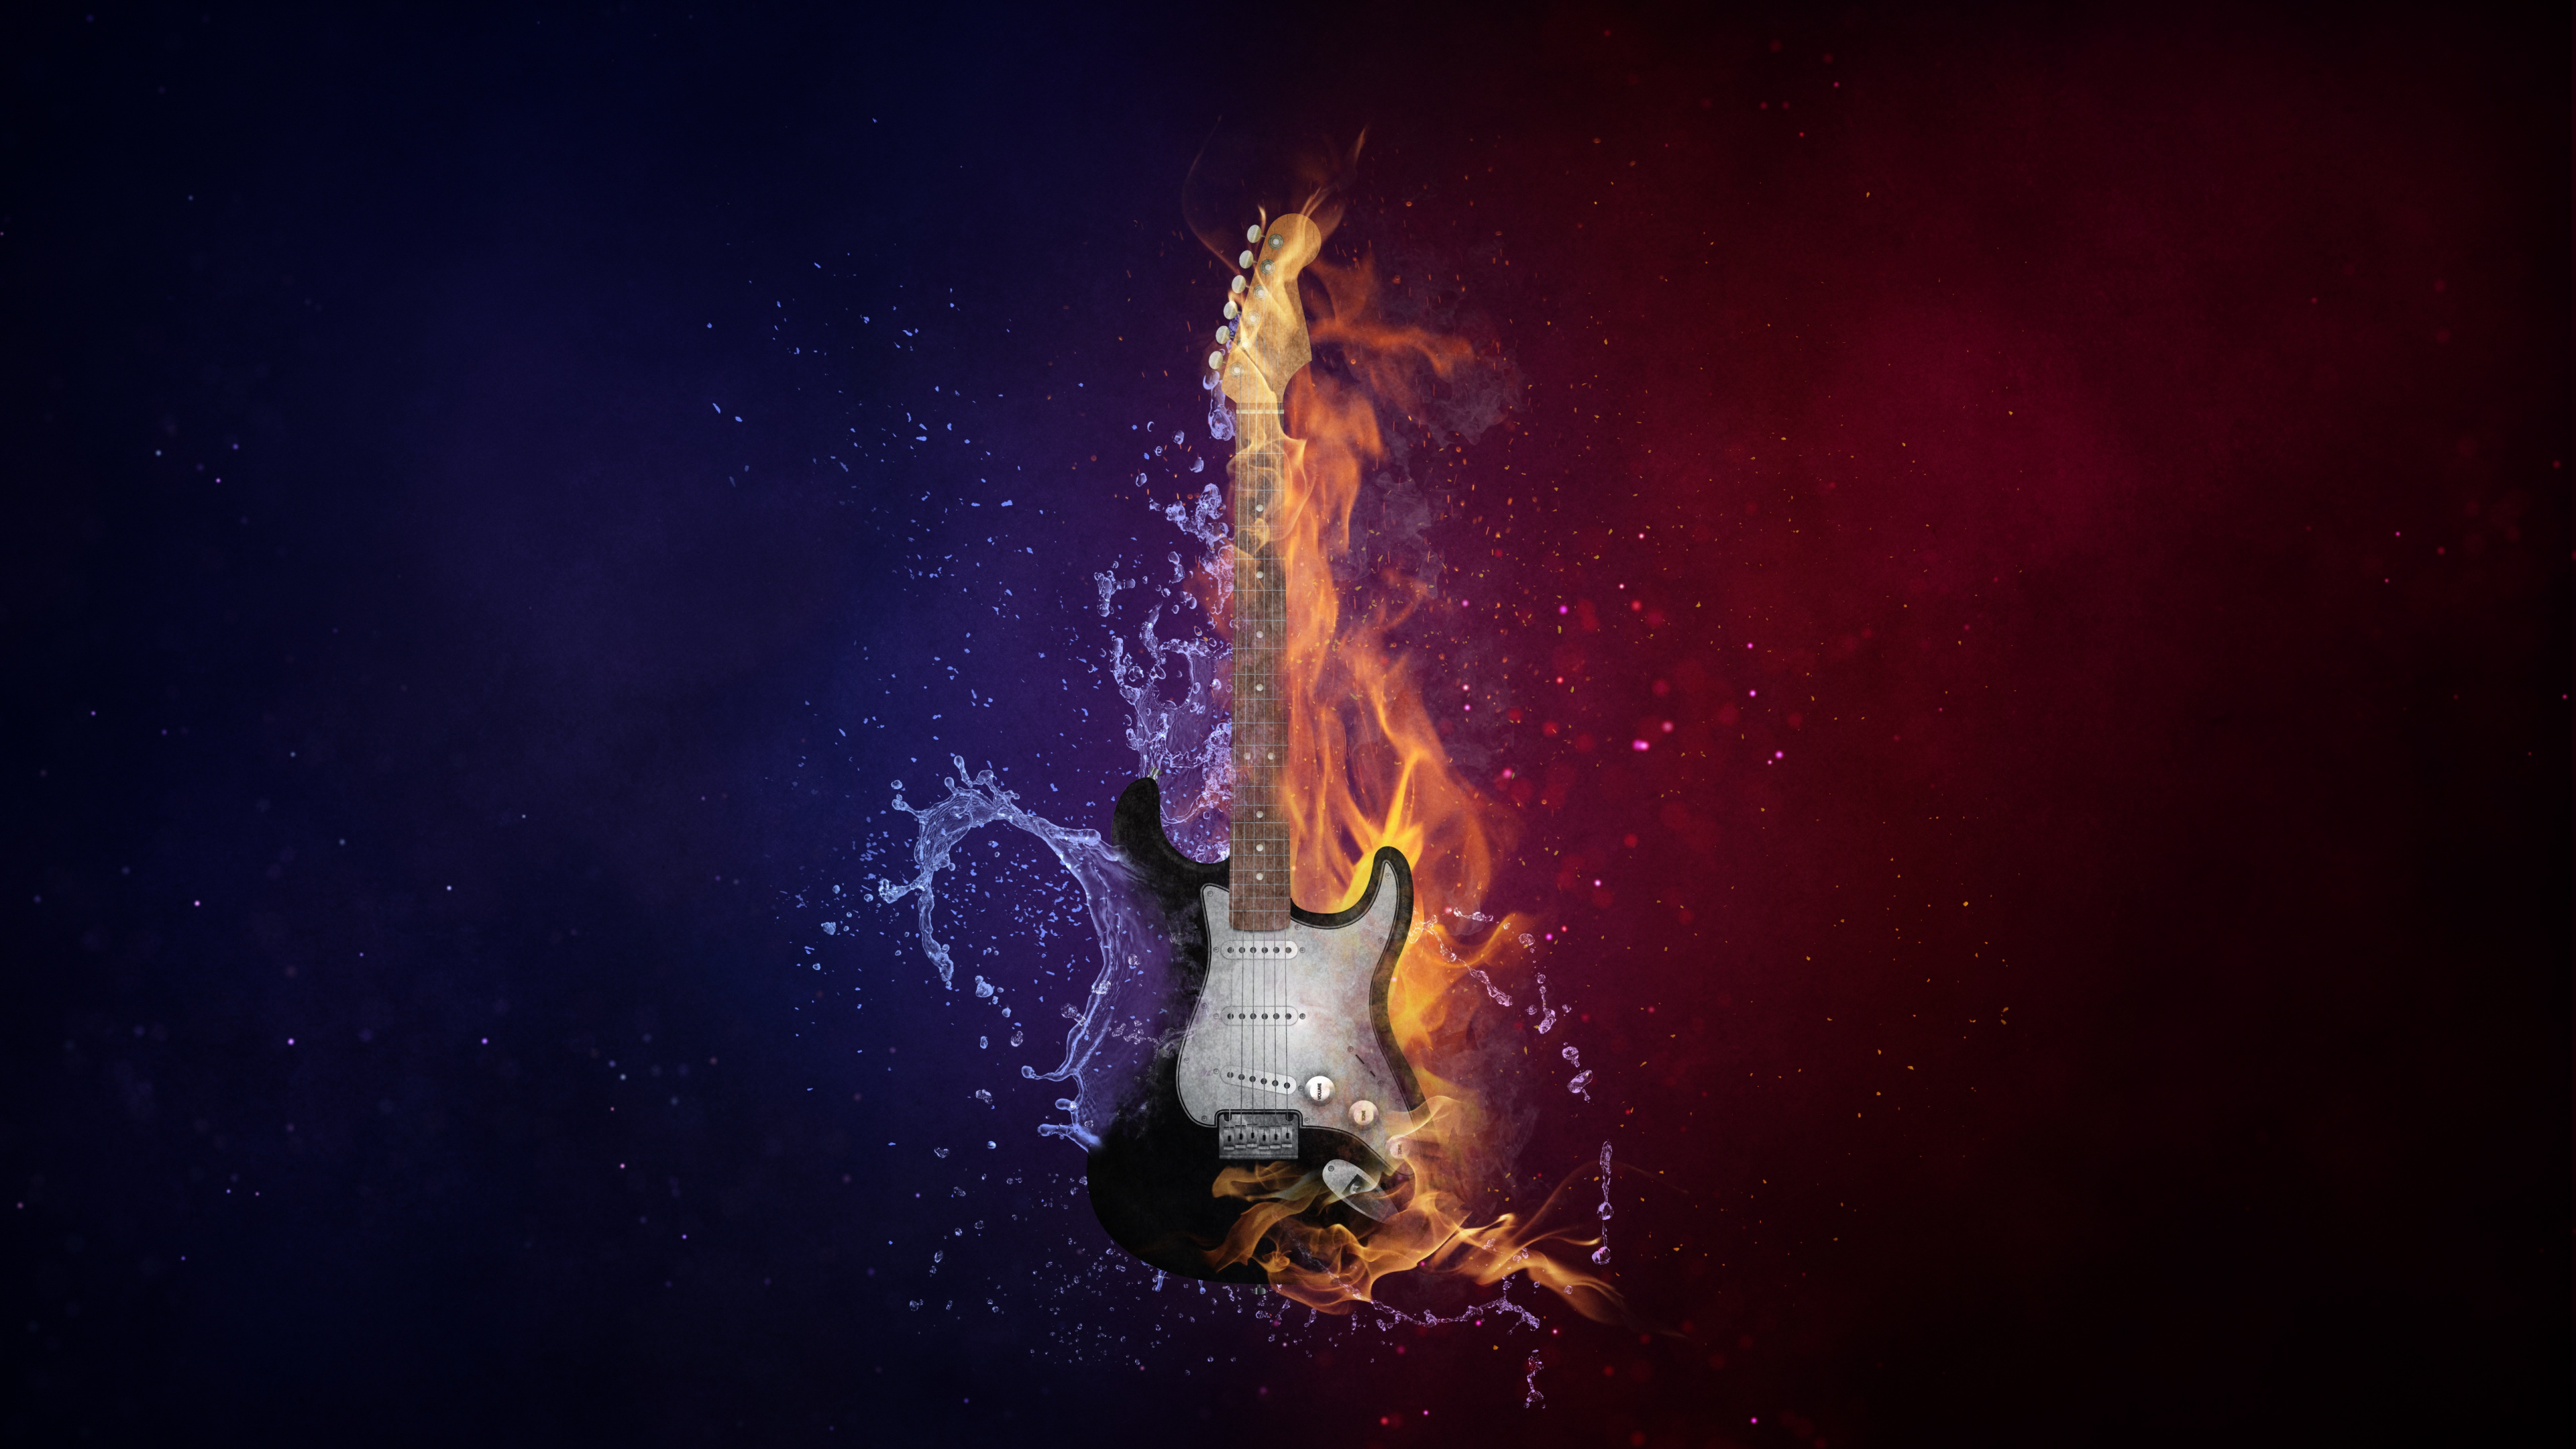 Guitare, Chaleur, Flamme, Obscurité, Feu. Wallpaper in 3840x2160 Resolution